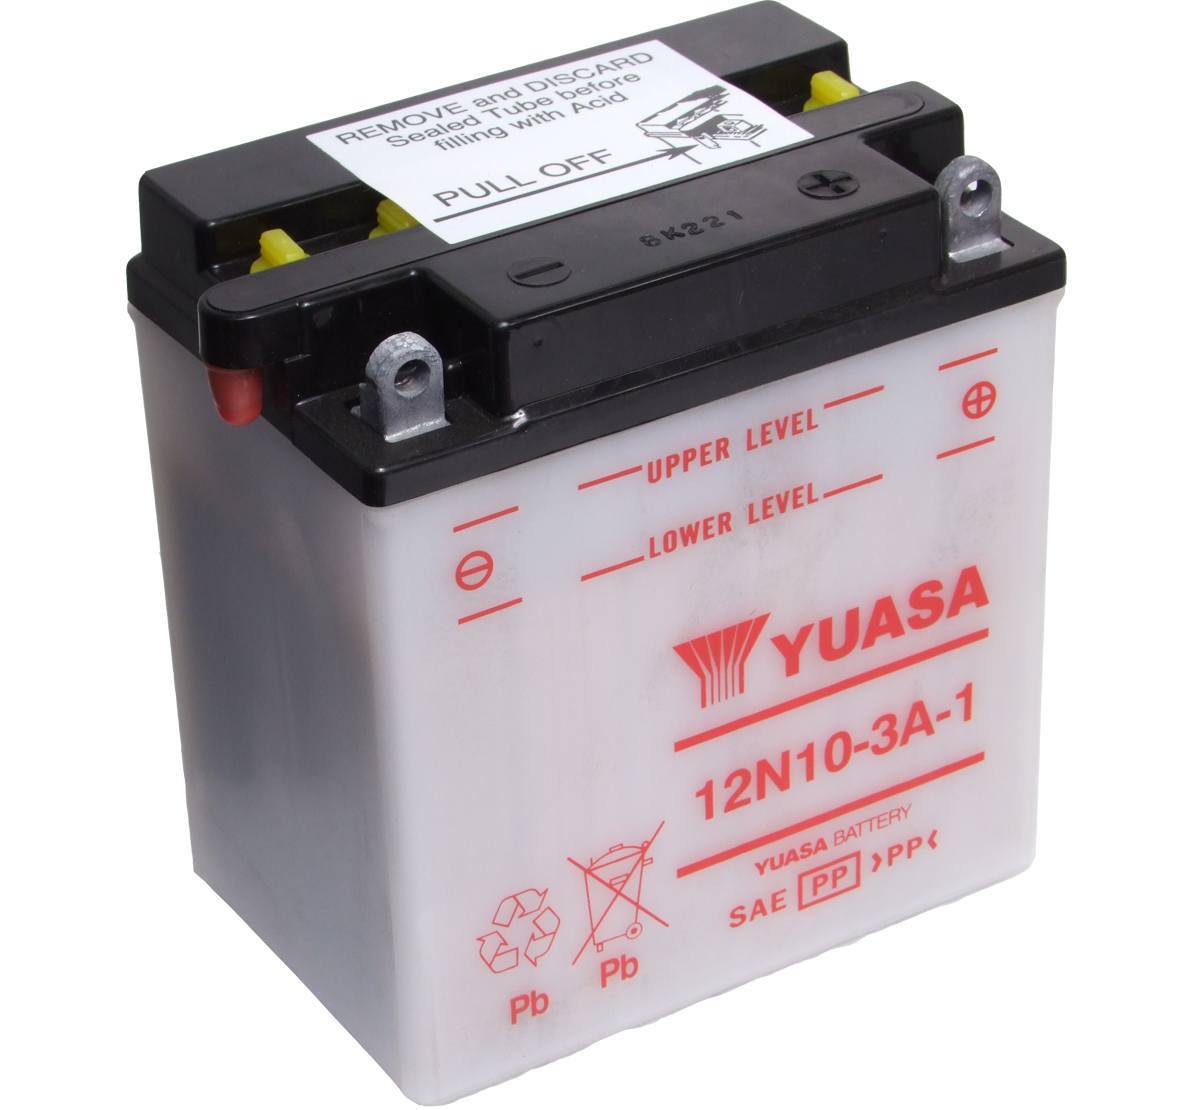 Yuasa 12N10-3A-1 12V Motorcycle Battery Inc Free Delivery